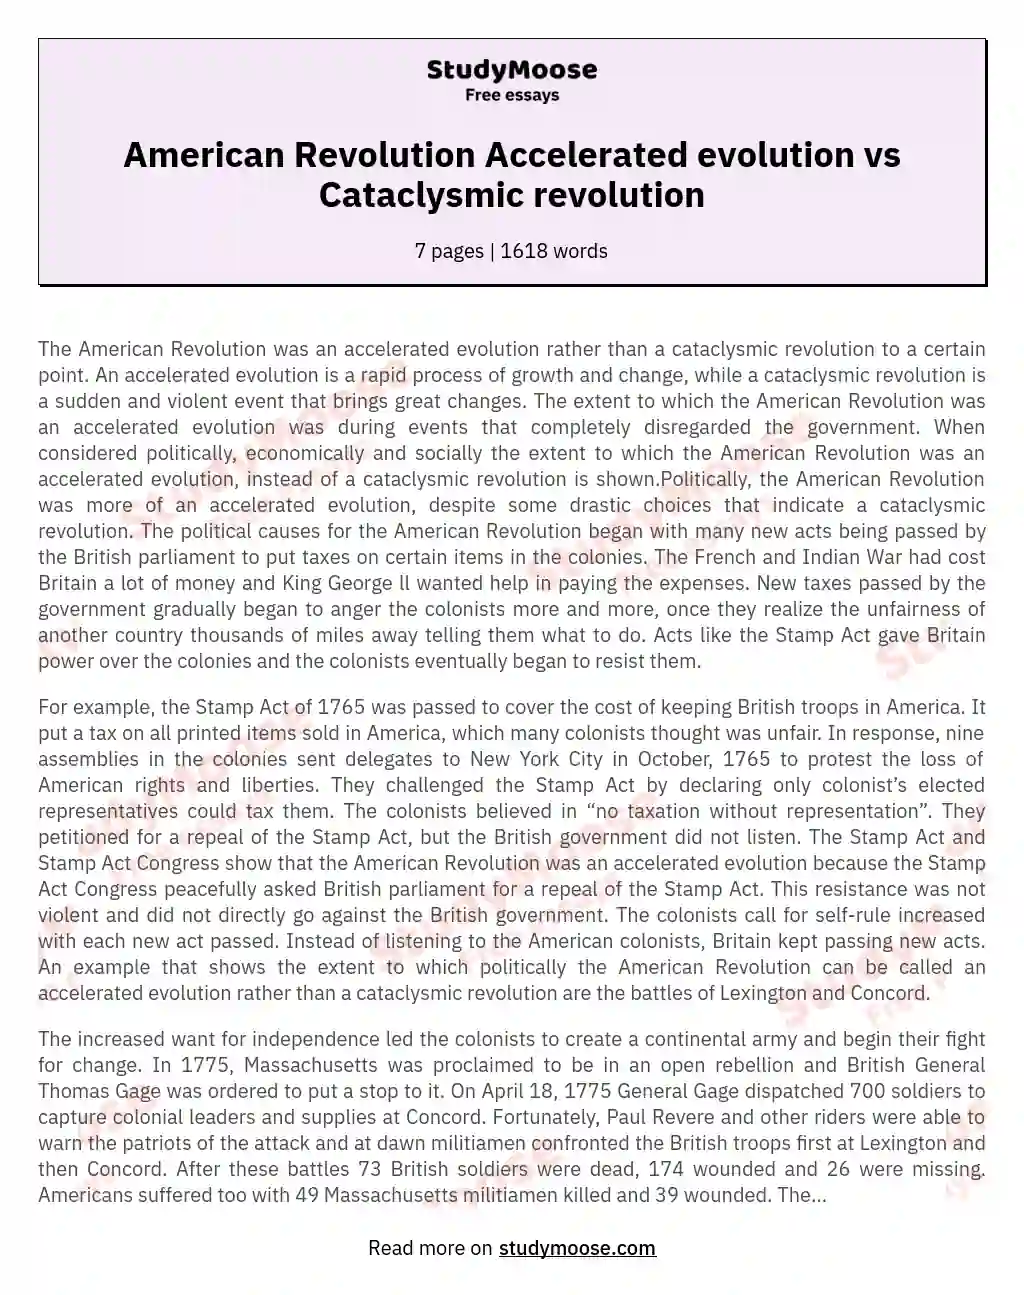 American Revolution Accelerated evolution vs Cataclysmic revolution